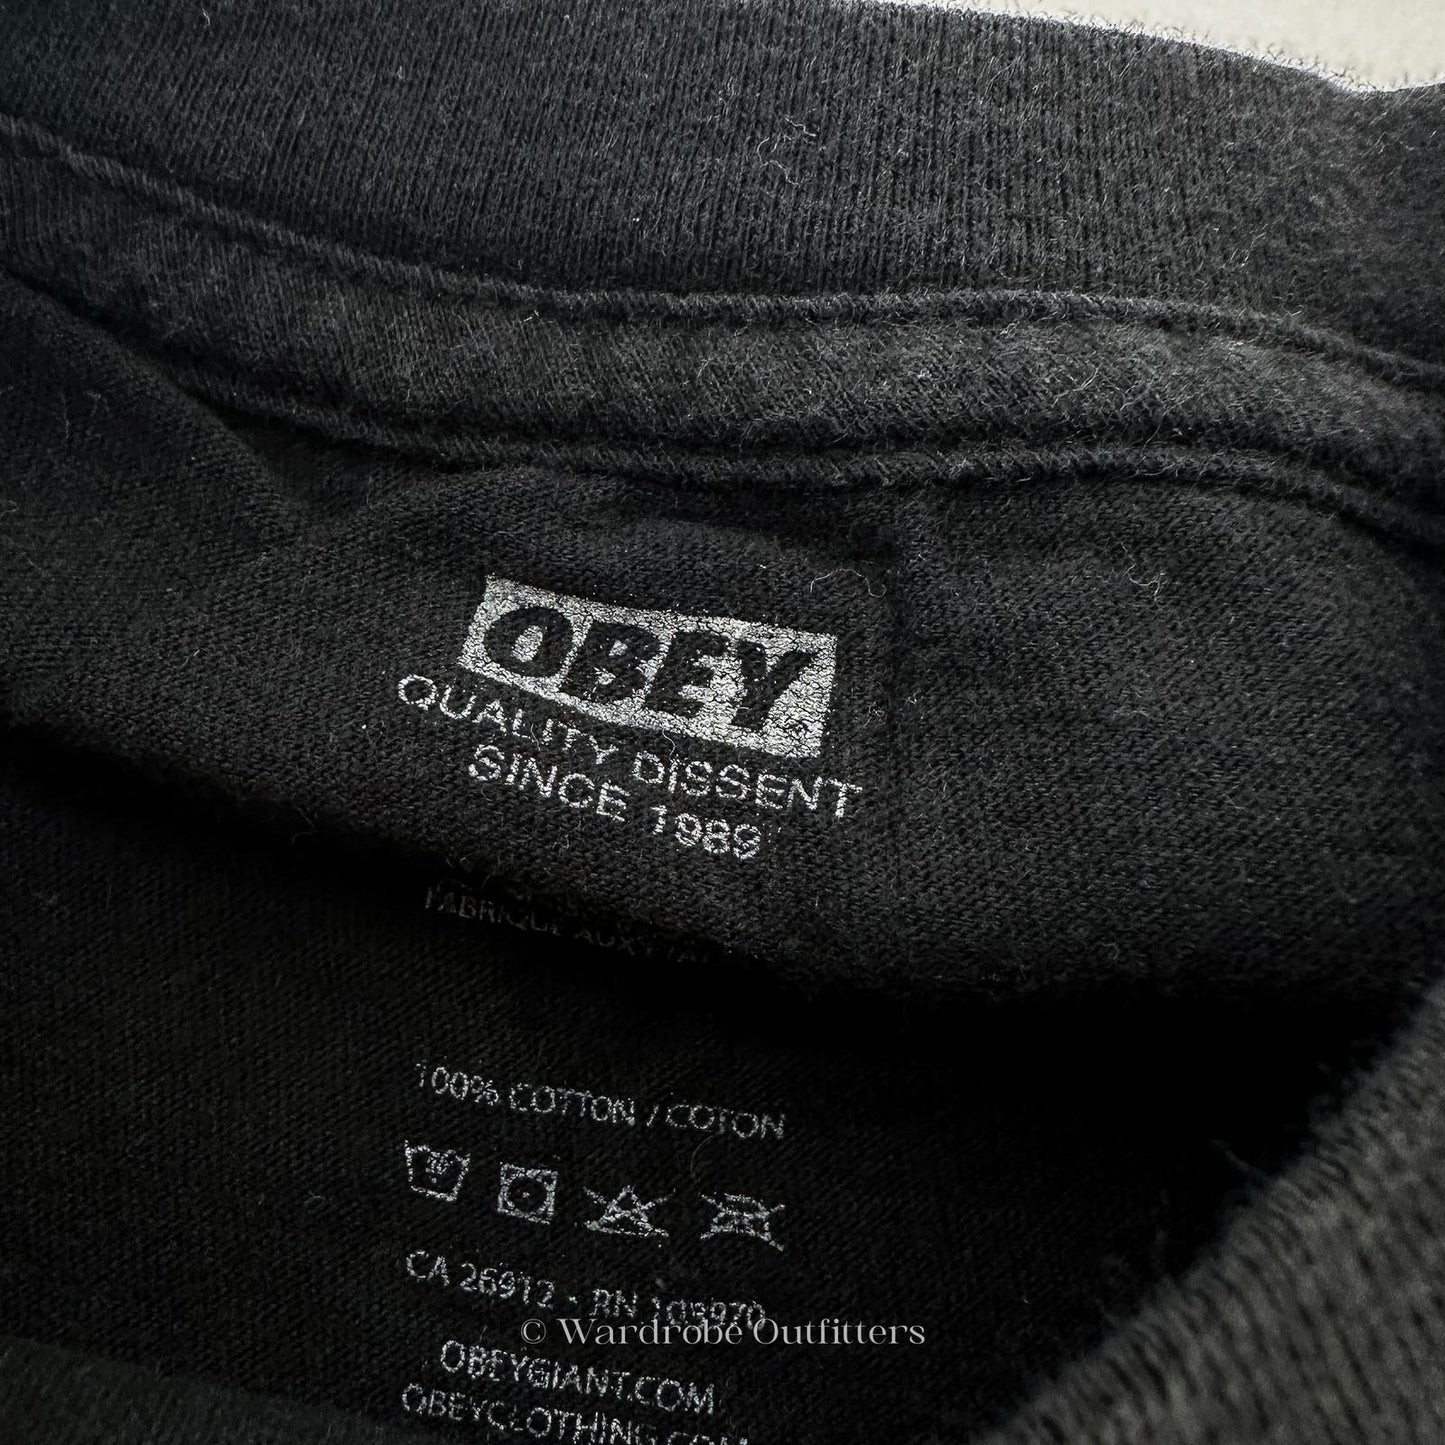 OBEY Propoganda Black Pocket Tee Shirt - S